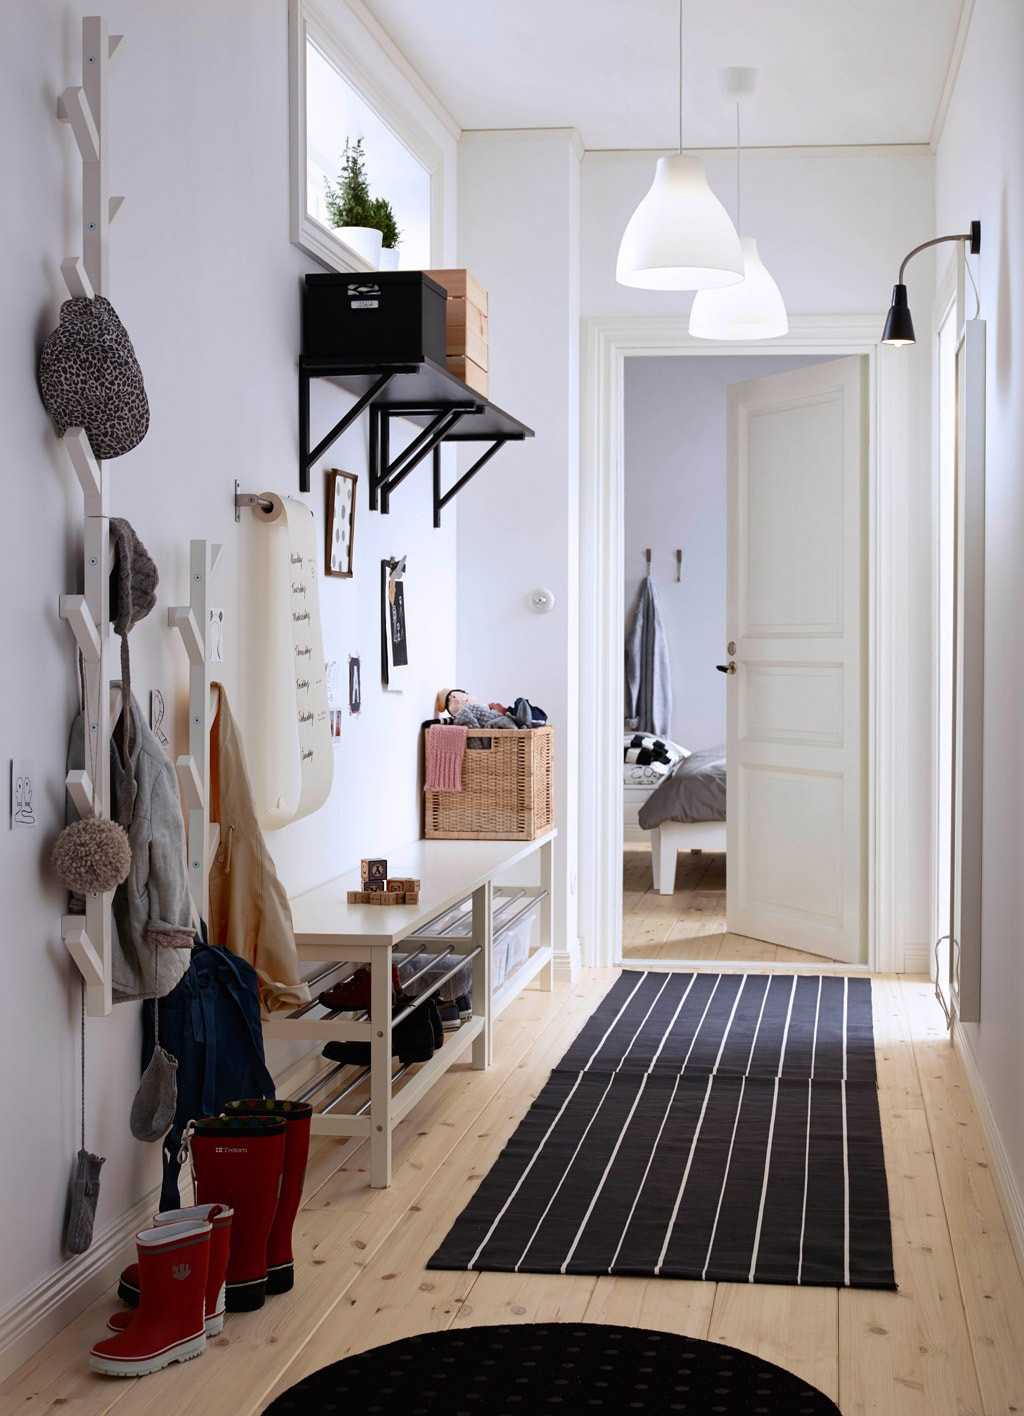 Best ideas about Hallway Furniture Ideas
. Save or Pin Hallway Furniture & Ideas Now.